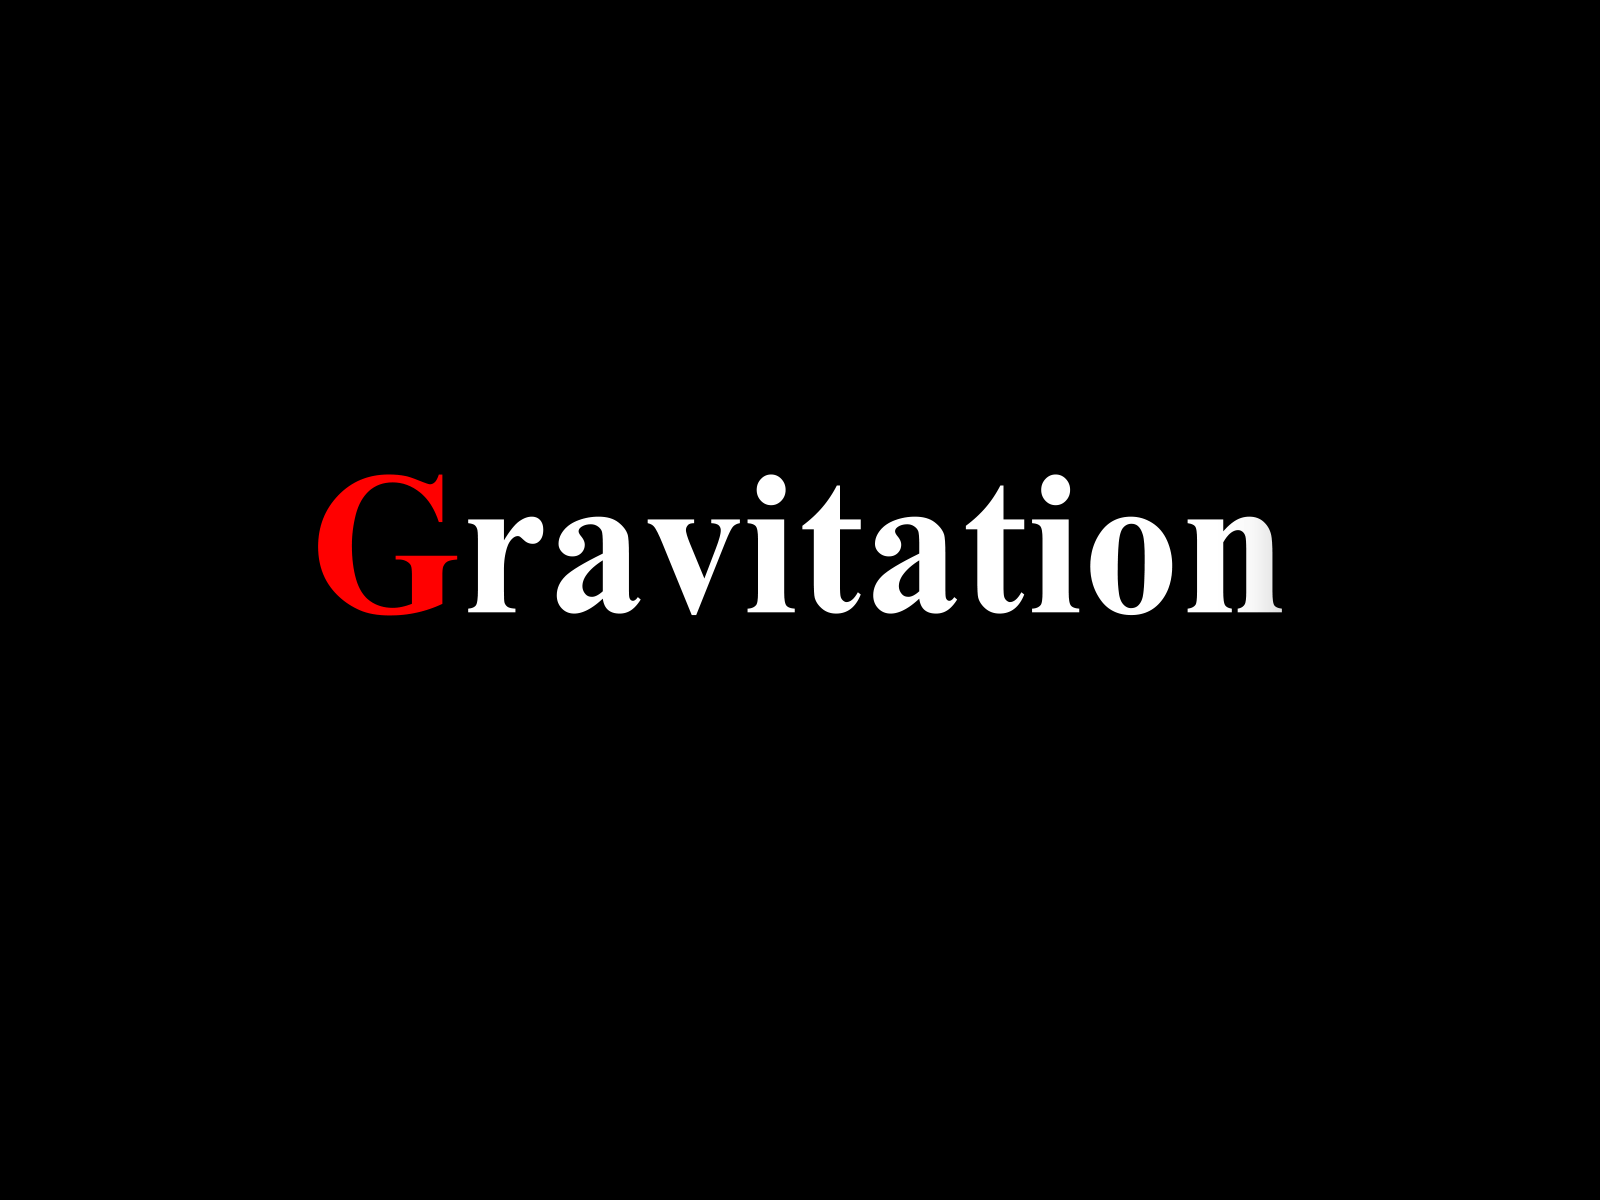 Gravitation icon logo